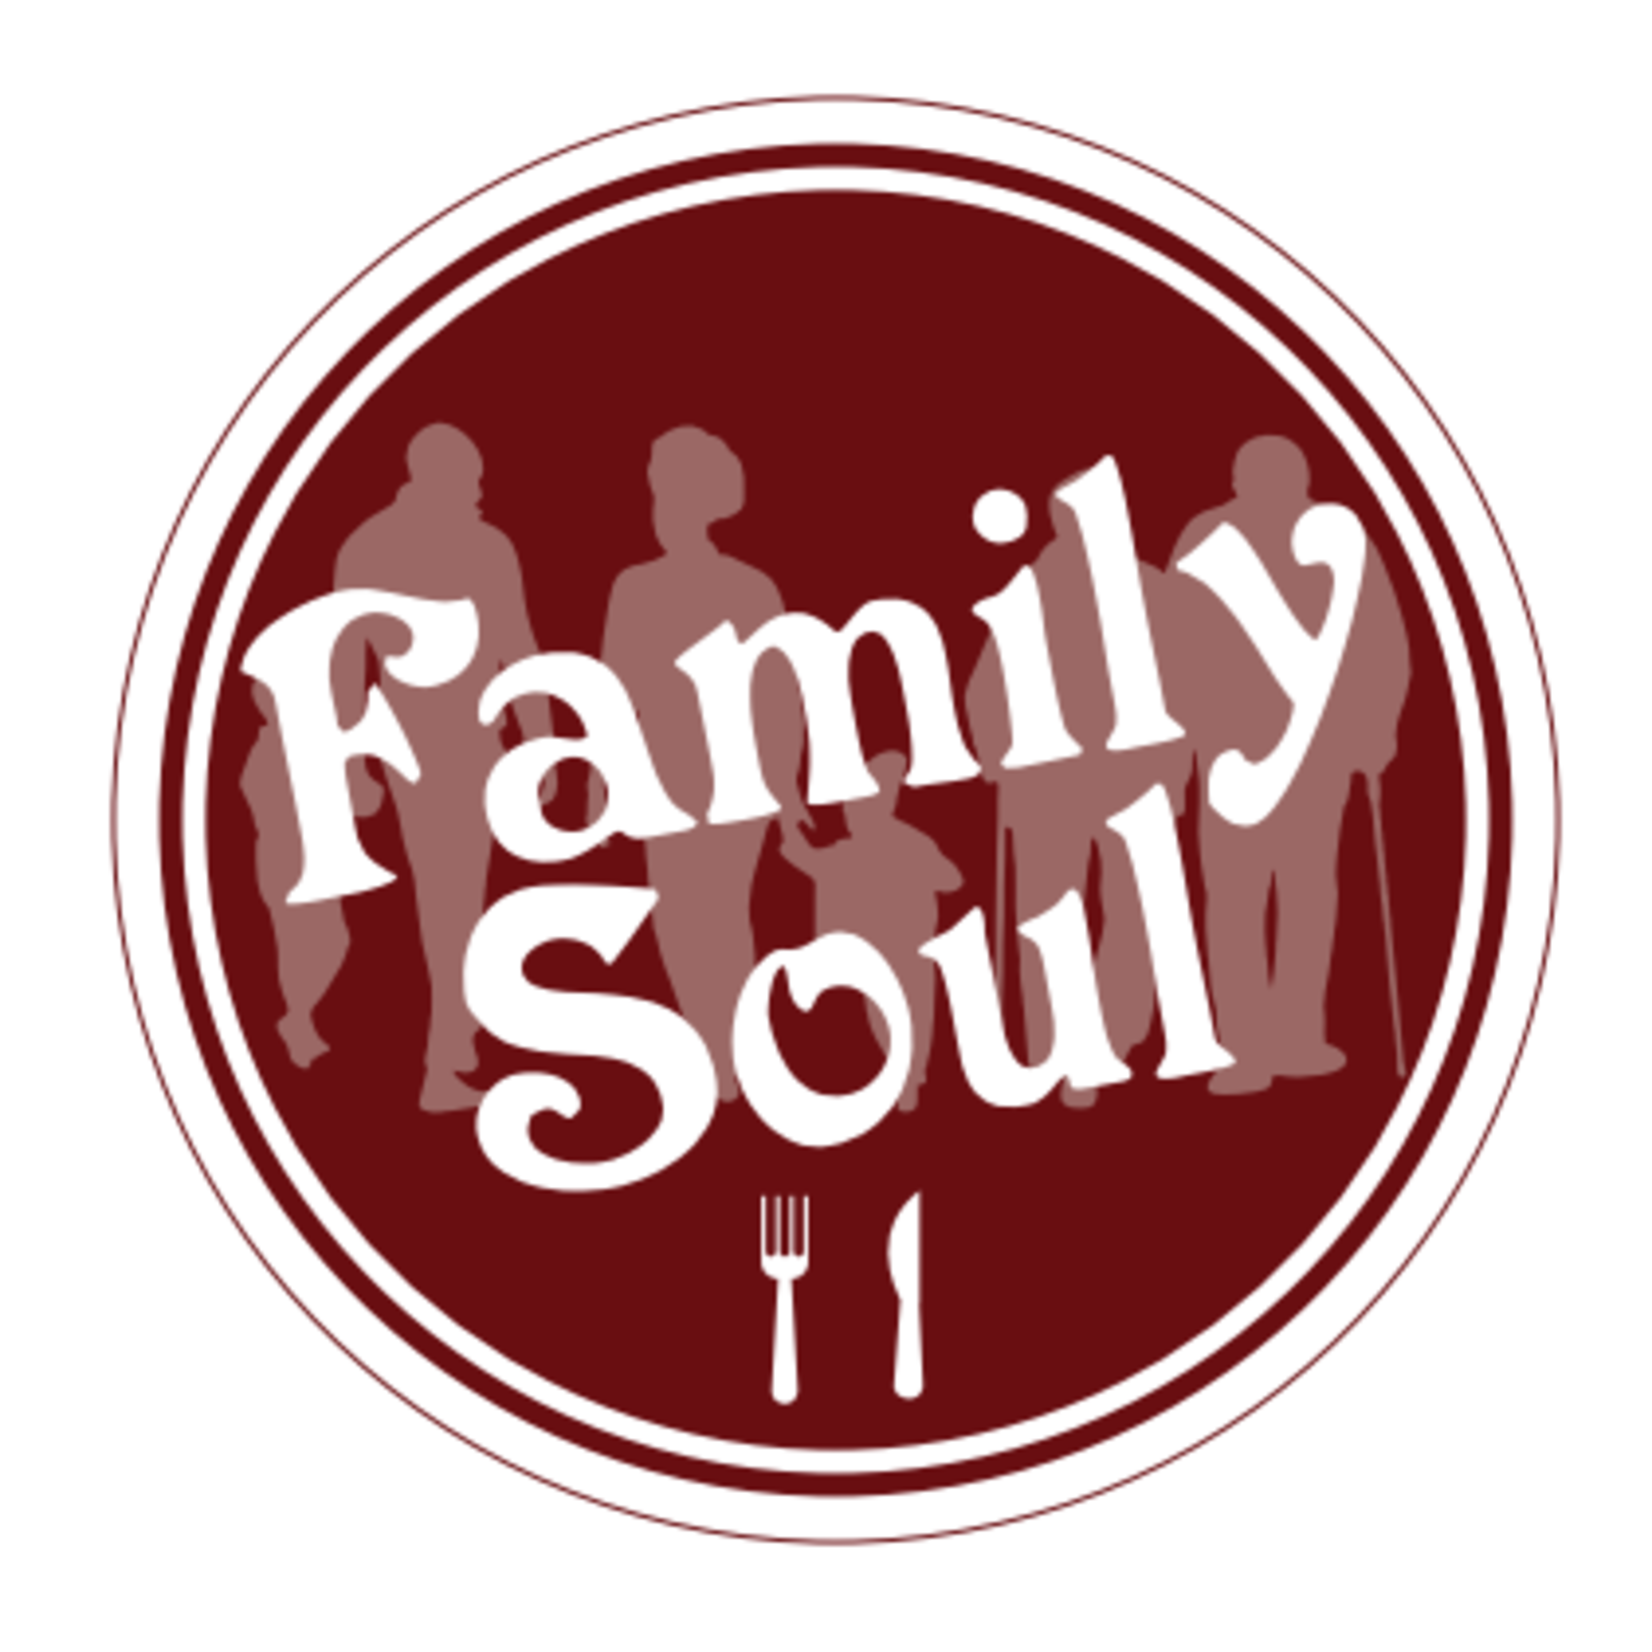 Family Soul Restaurant Family Soul Restaurant $20 - Menu Items (EXP 60 DAYS)